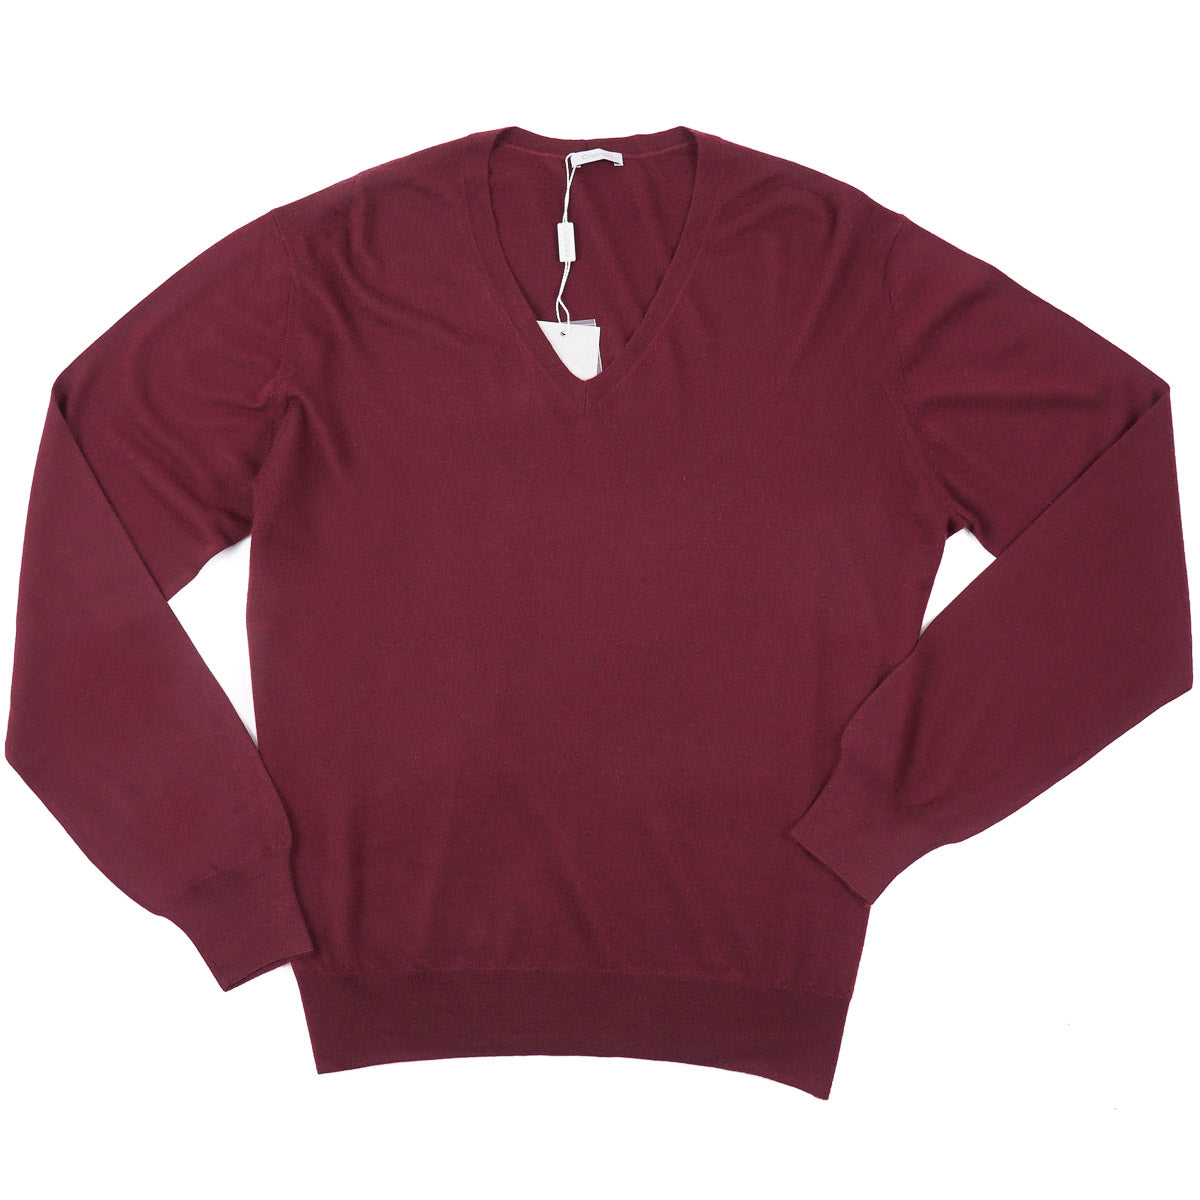 Cruciani Extrafine Cashmere Sweater - Top Shelf Apparel